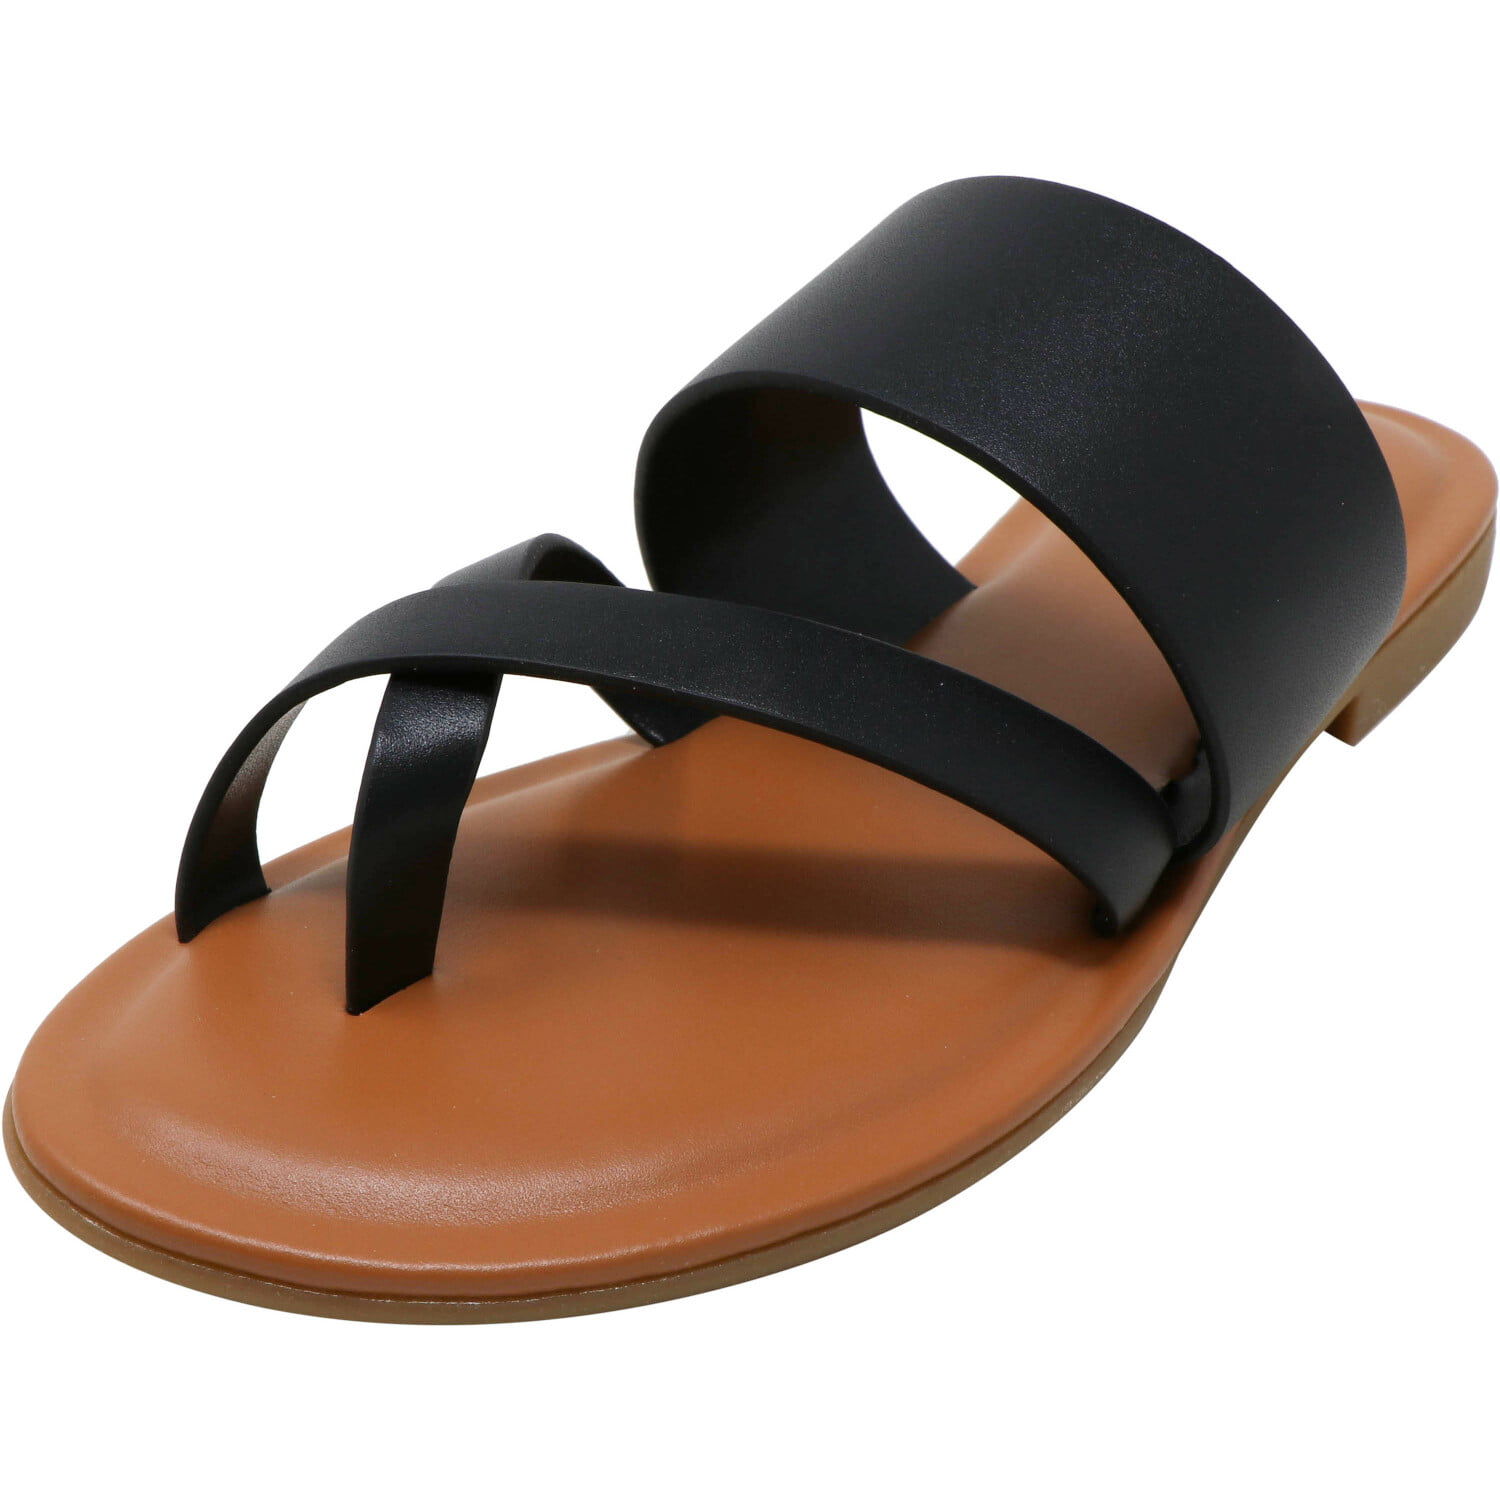 Celodia Leather Black Sandal - 6M 